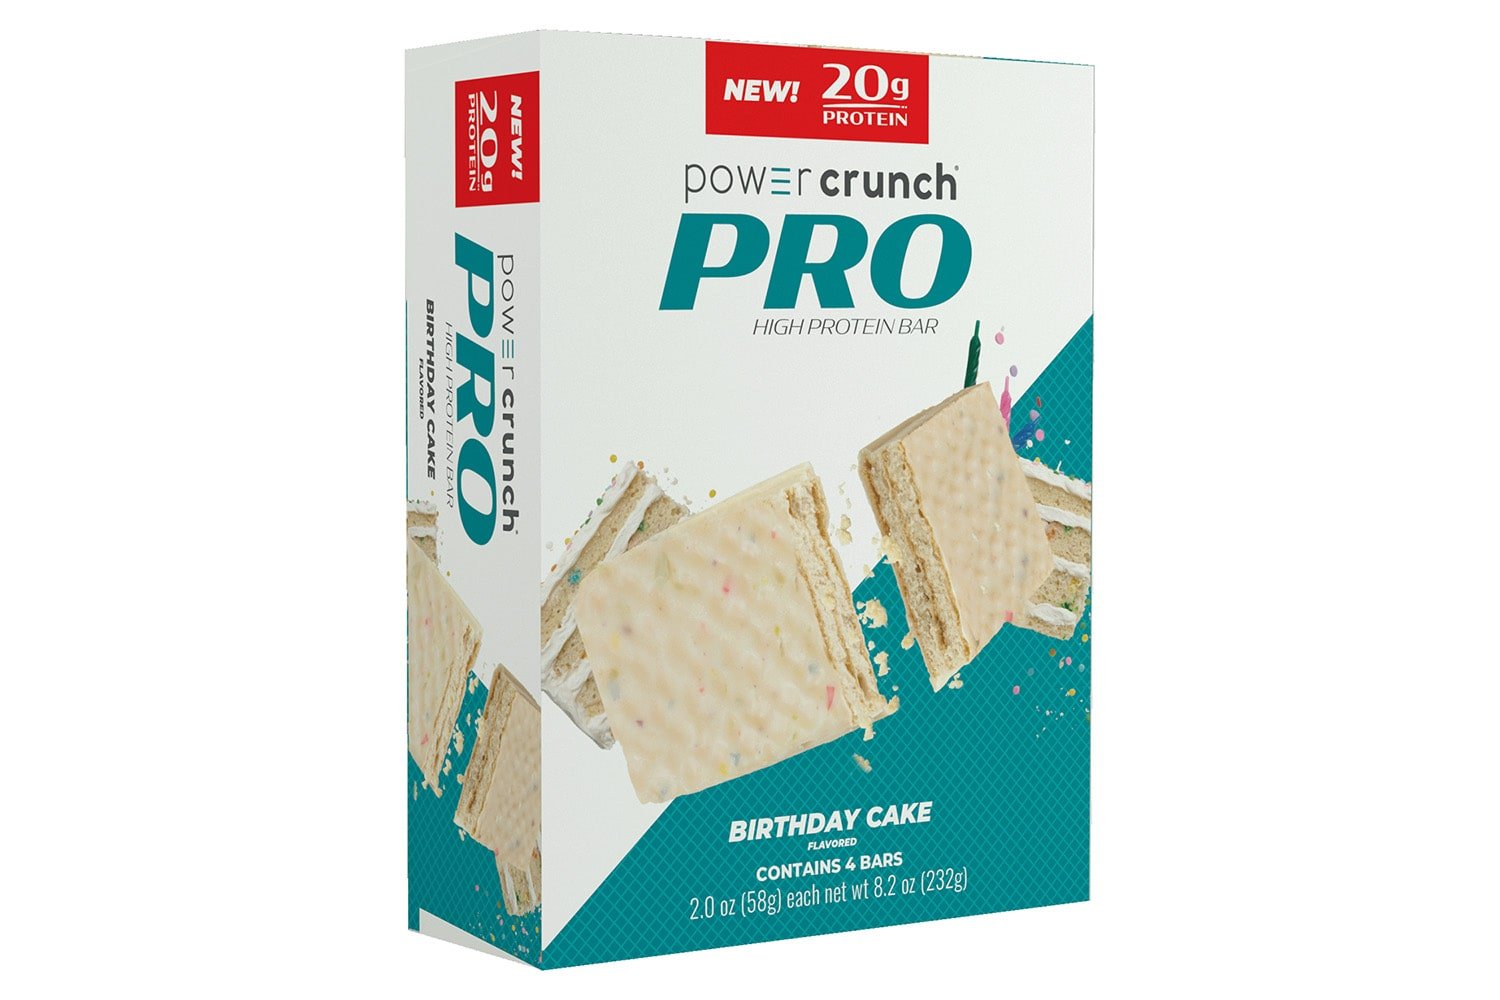 Box of Power Crunch Pro Birthday Cake 20g protein bars